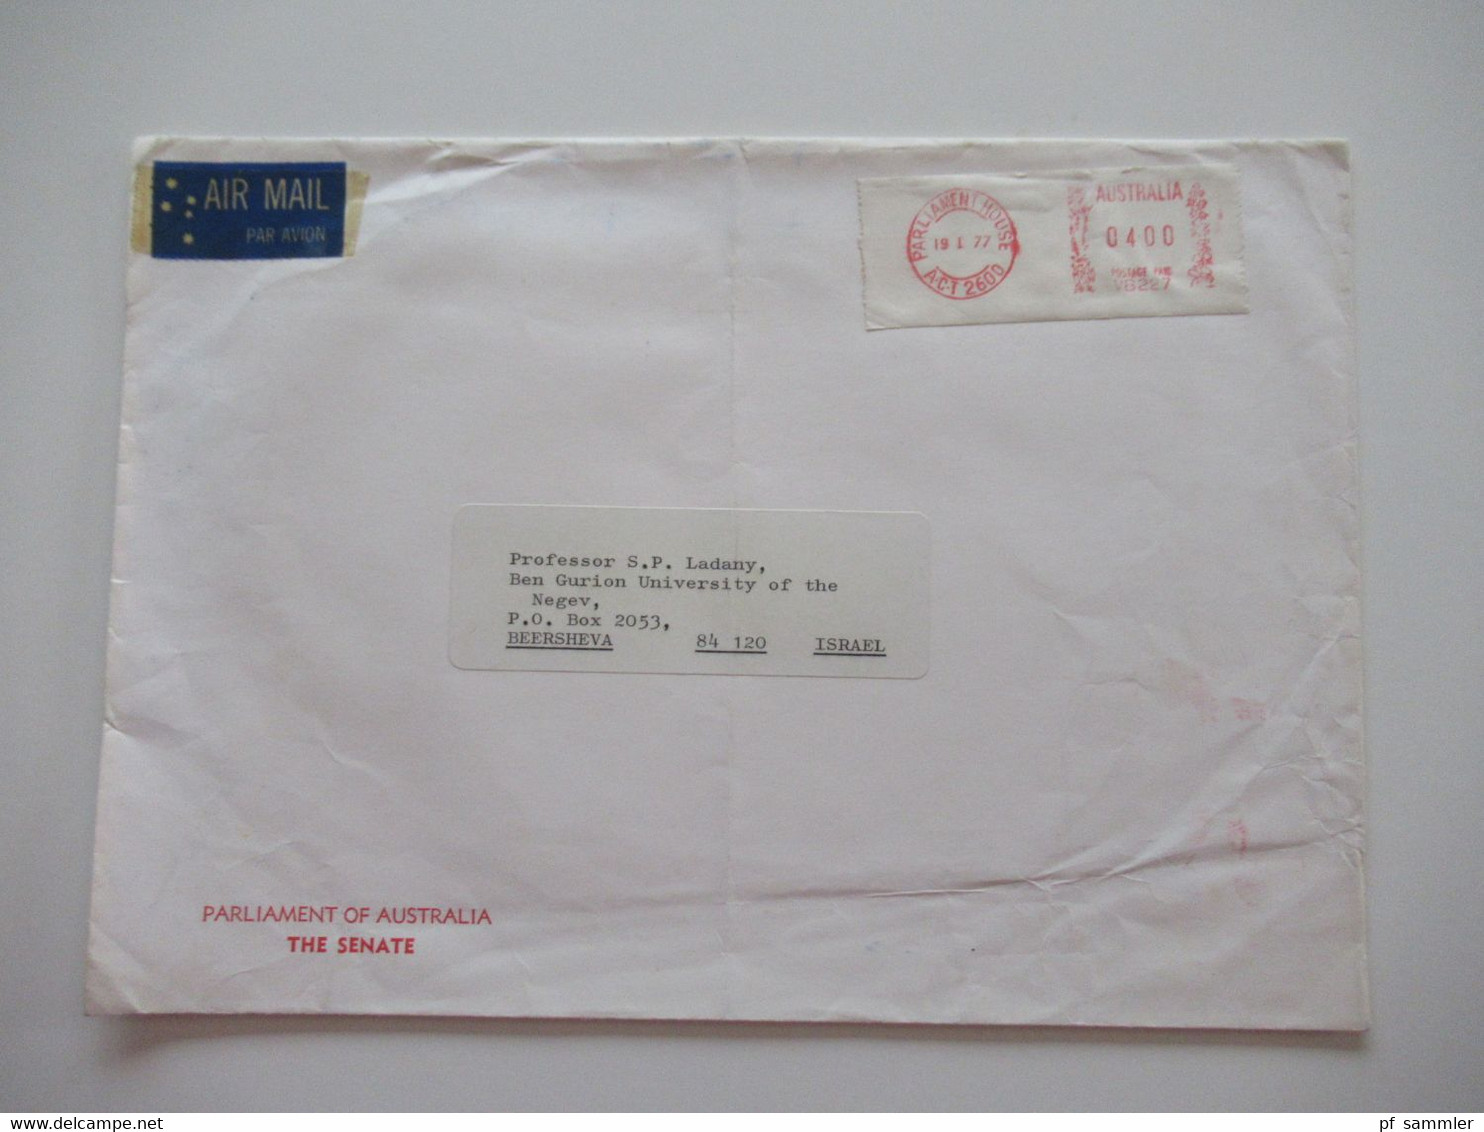 Australien 1977 Air Mail Nach Israel Umschlag Parliament Of Australia The Senate Postage Paid Parliament House ACT 2600 - Storia Postale